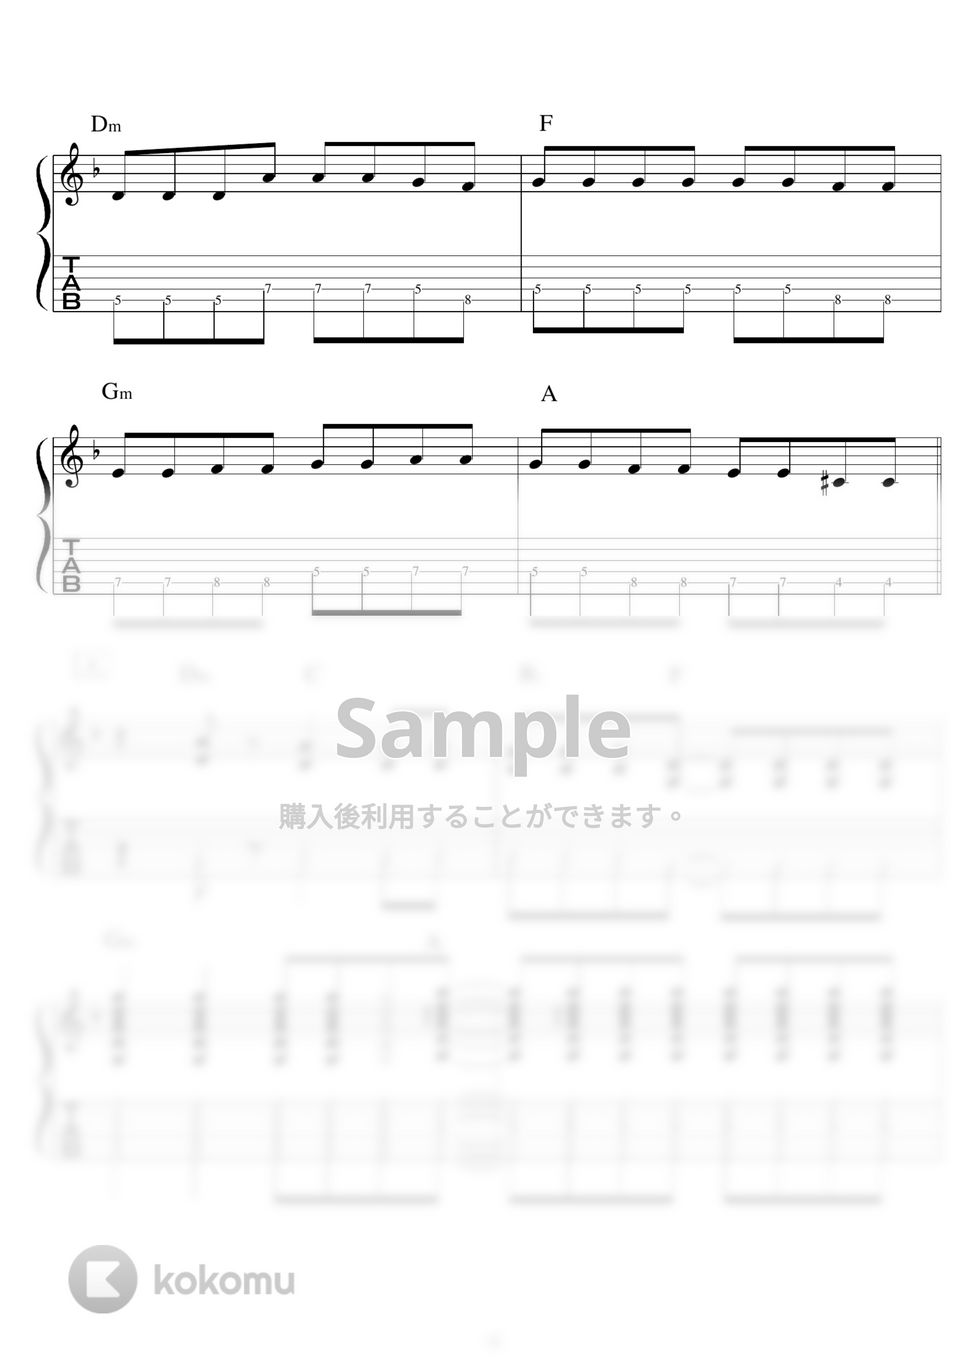 Hi-STANDARD - Going Crazy ギター演奏動画付TAB譜 by バイトーン音楽教室